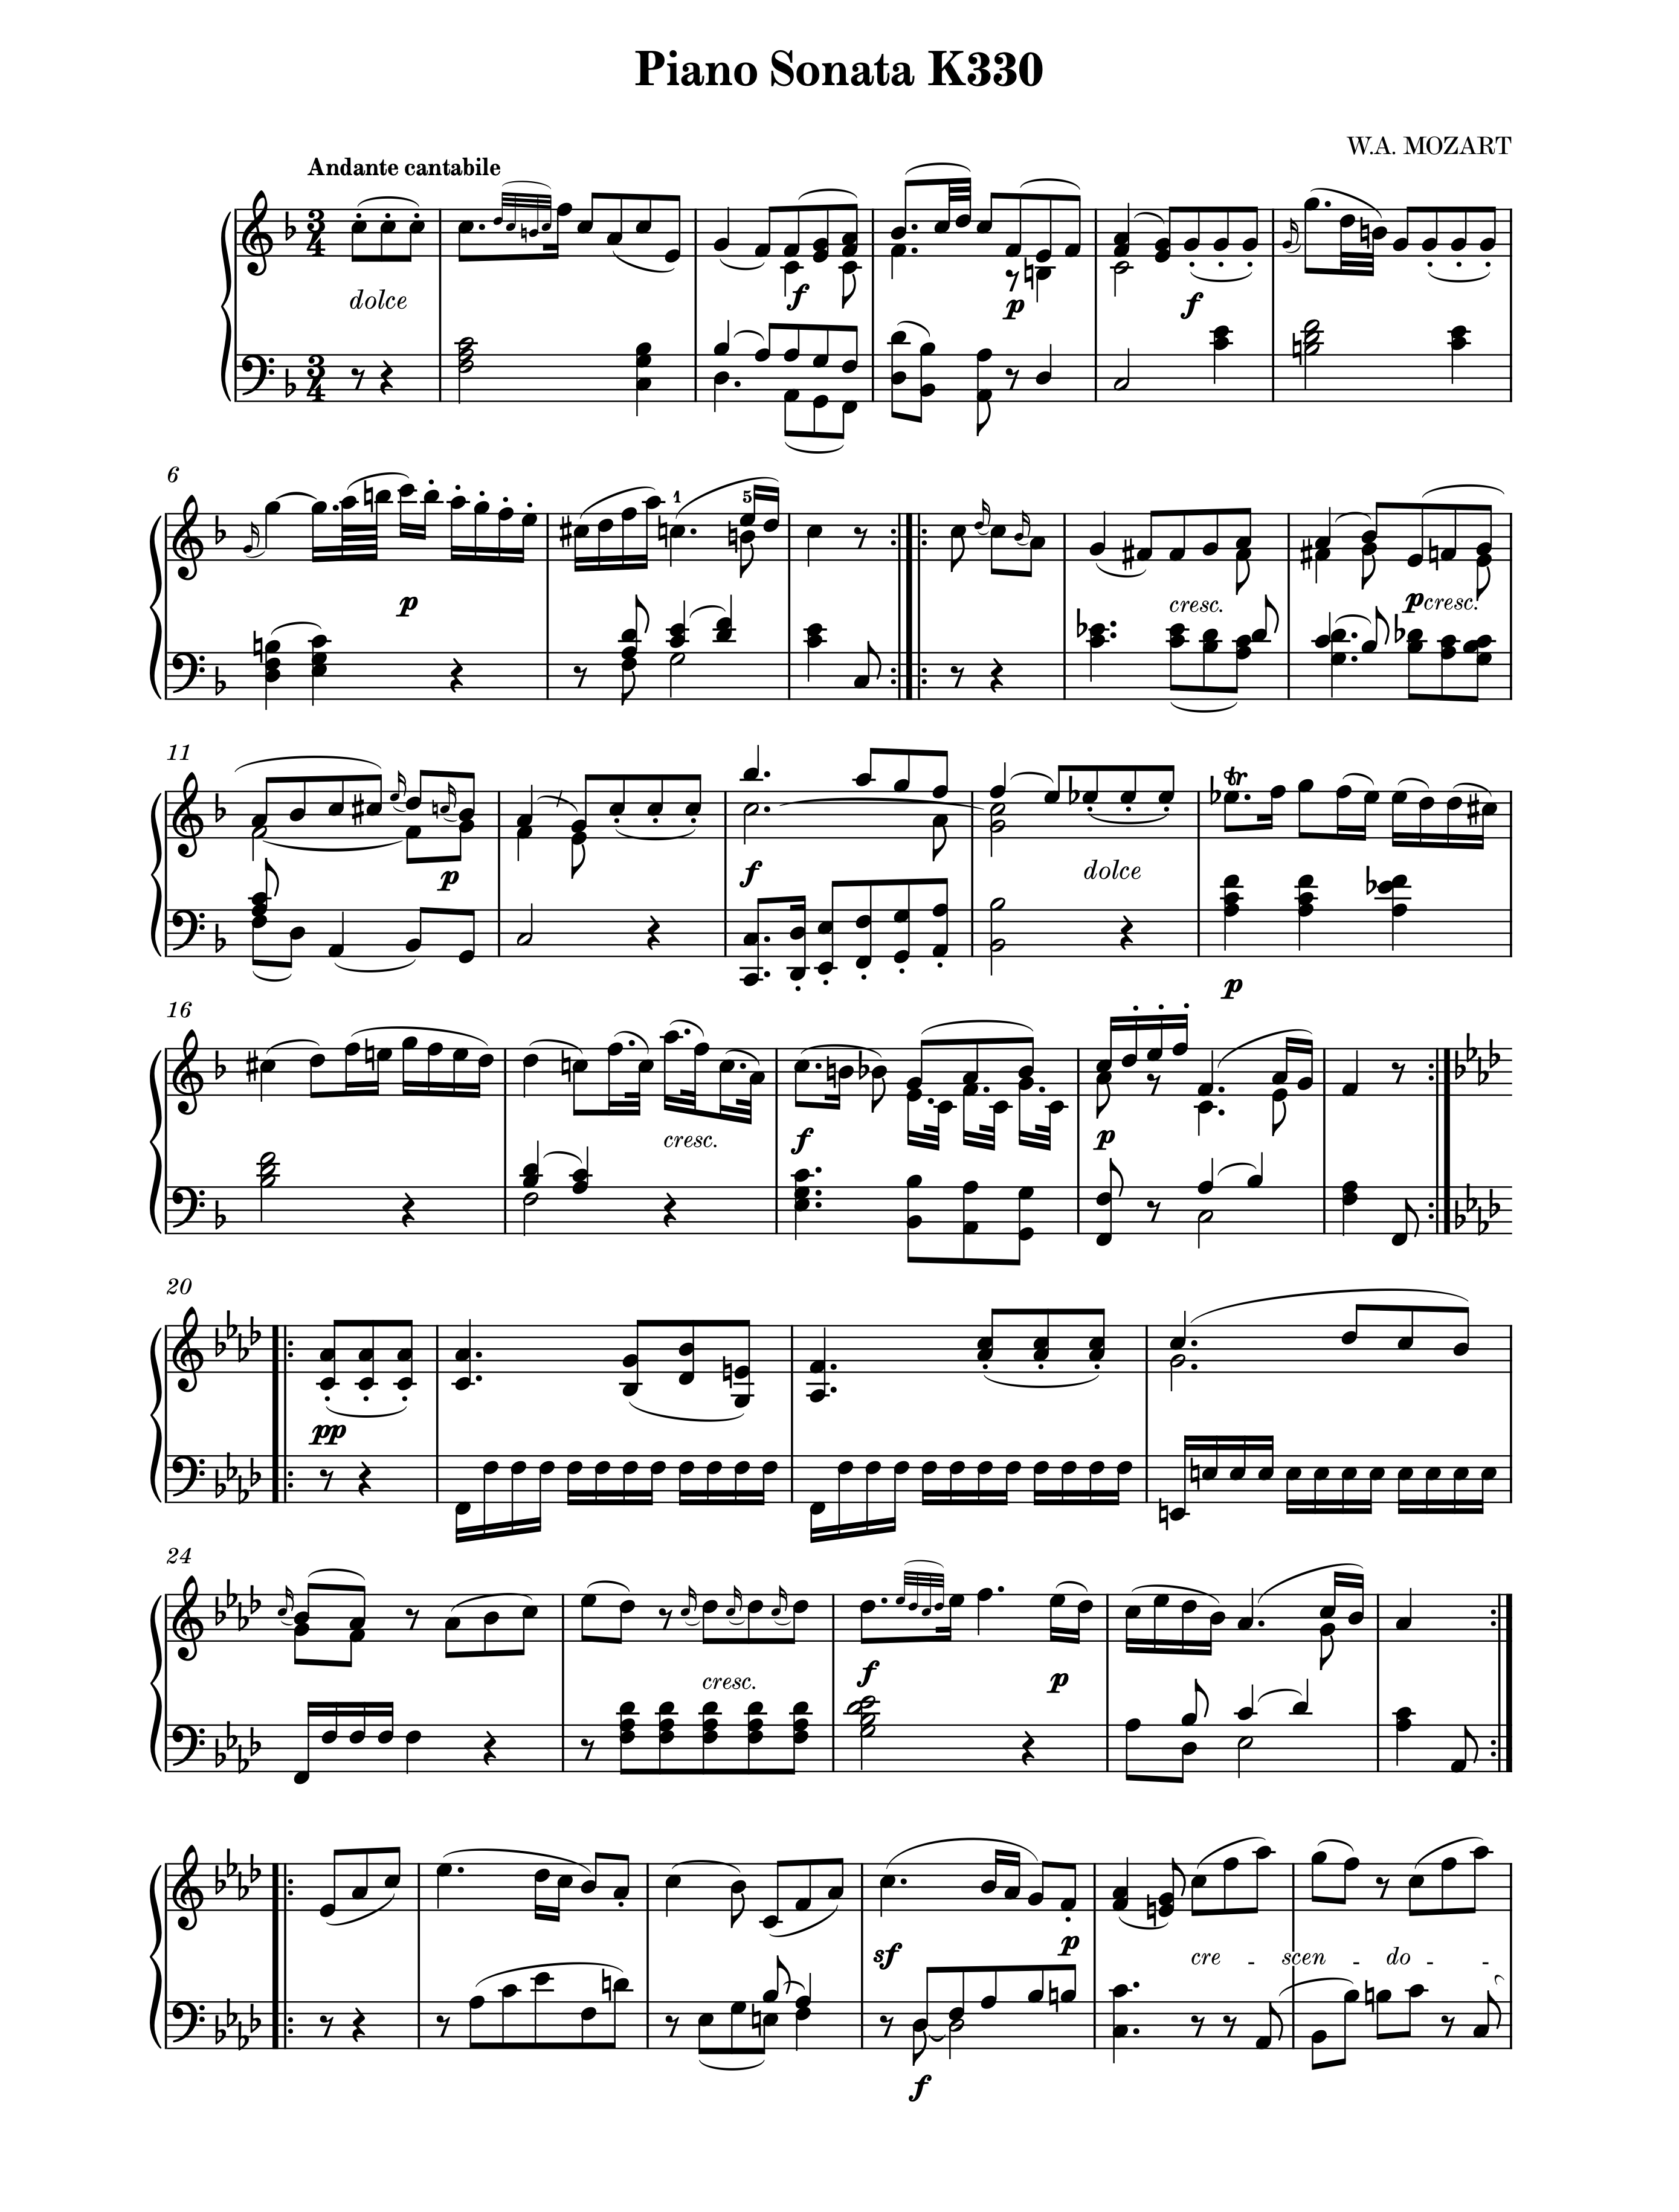 Mozart Piano K330 - Full score 001.png